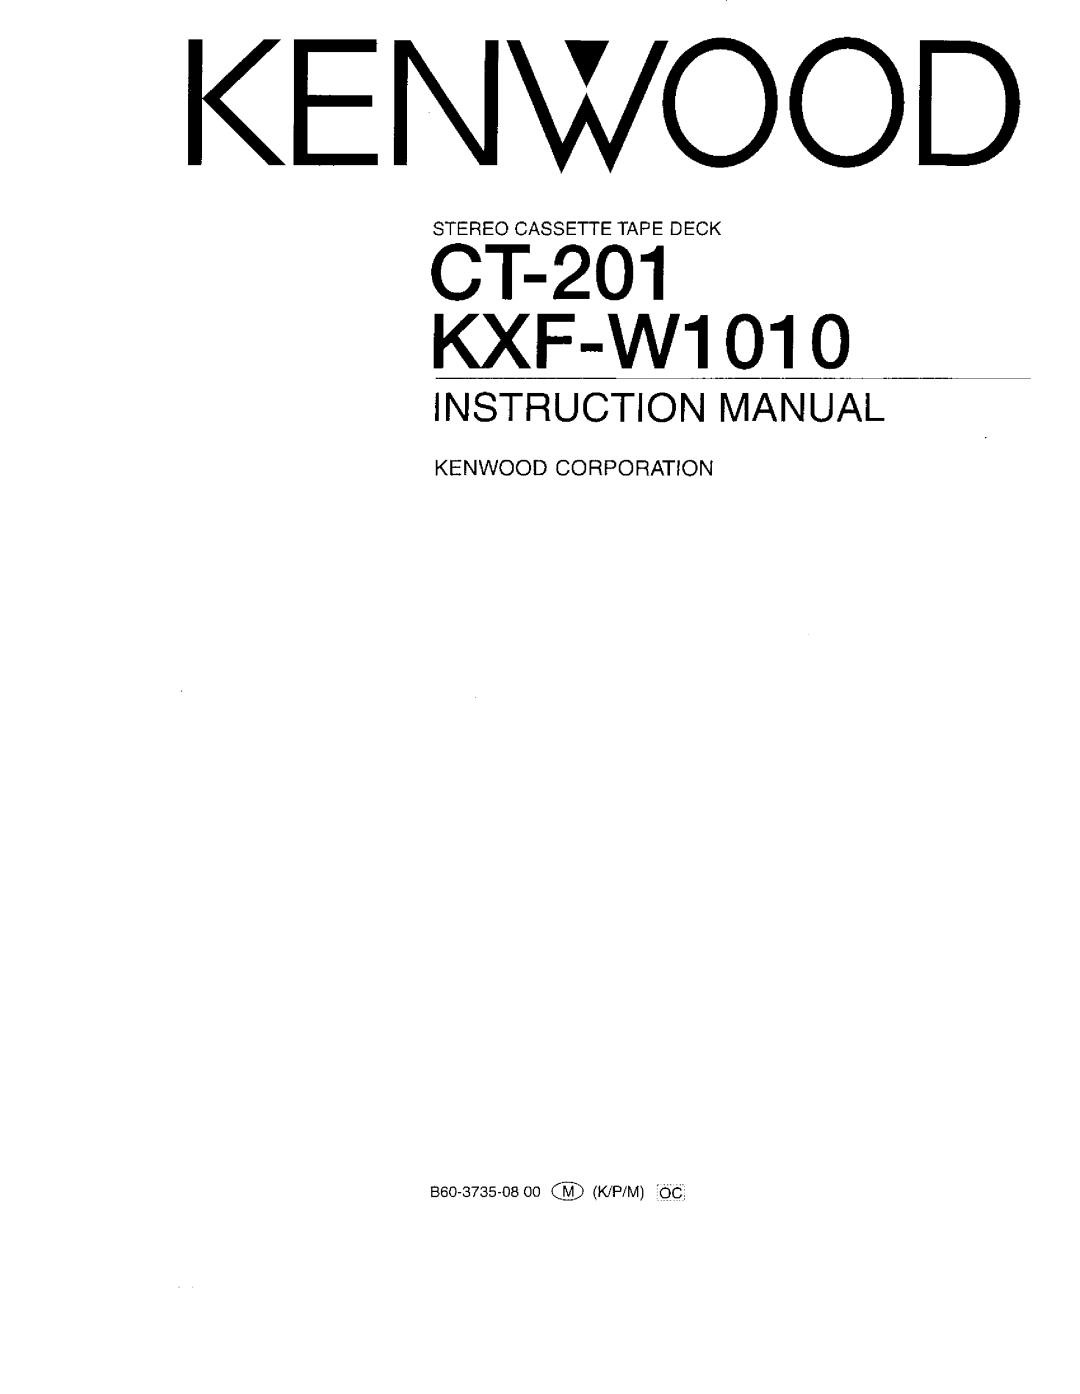 Kenwood KXF-W1010, CT-201 manual 